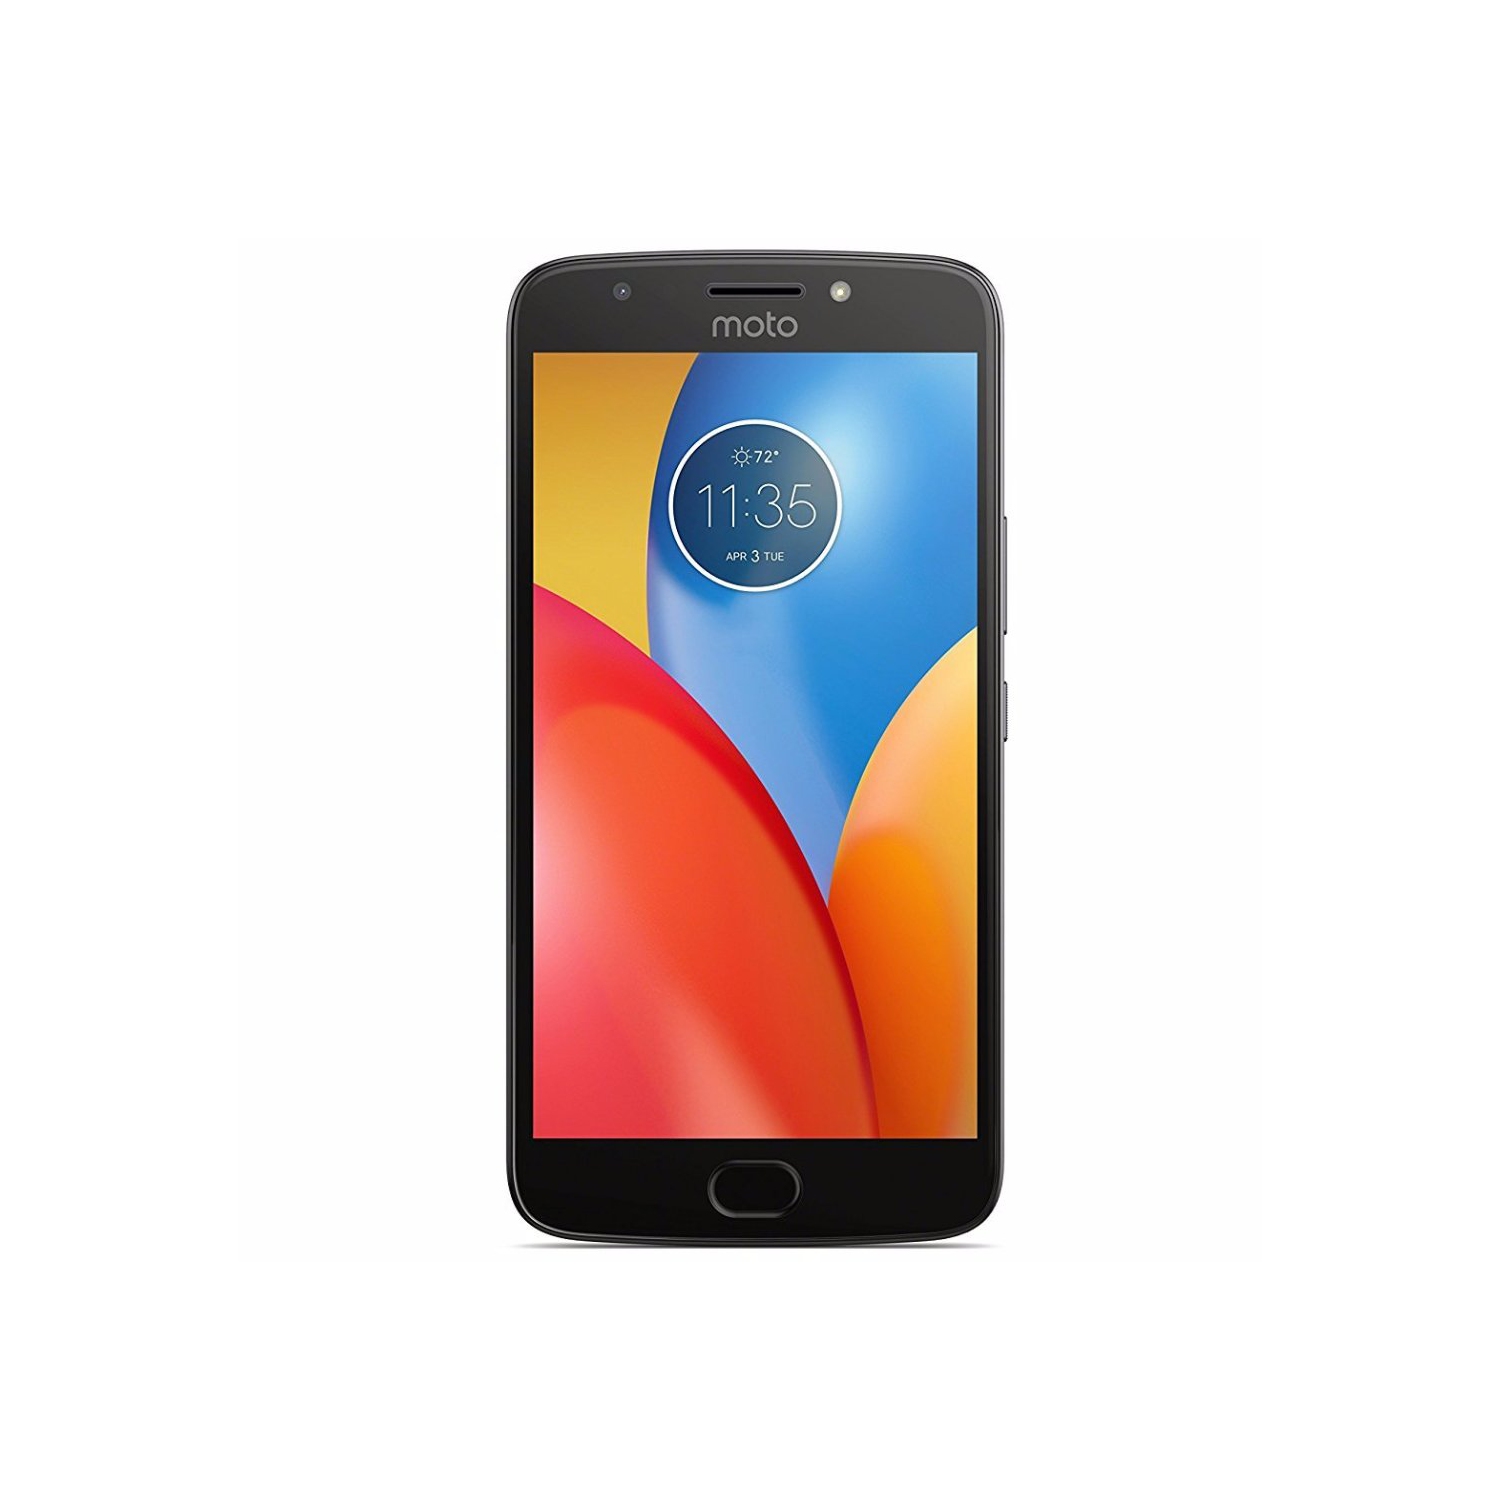 Motorola Moto E4 Plus - 32GB Smartphone - Gray - Factory Unlocked - Certified Pre-Owned